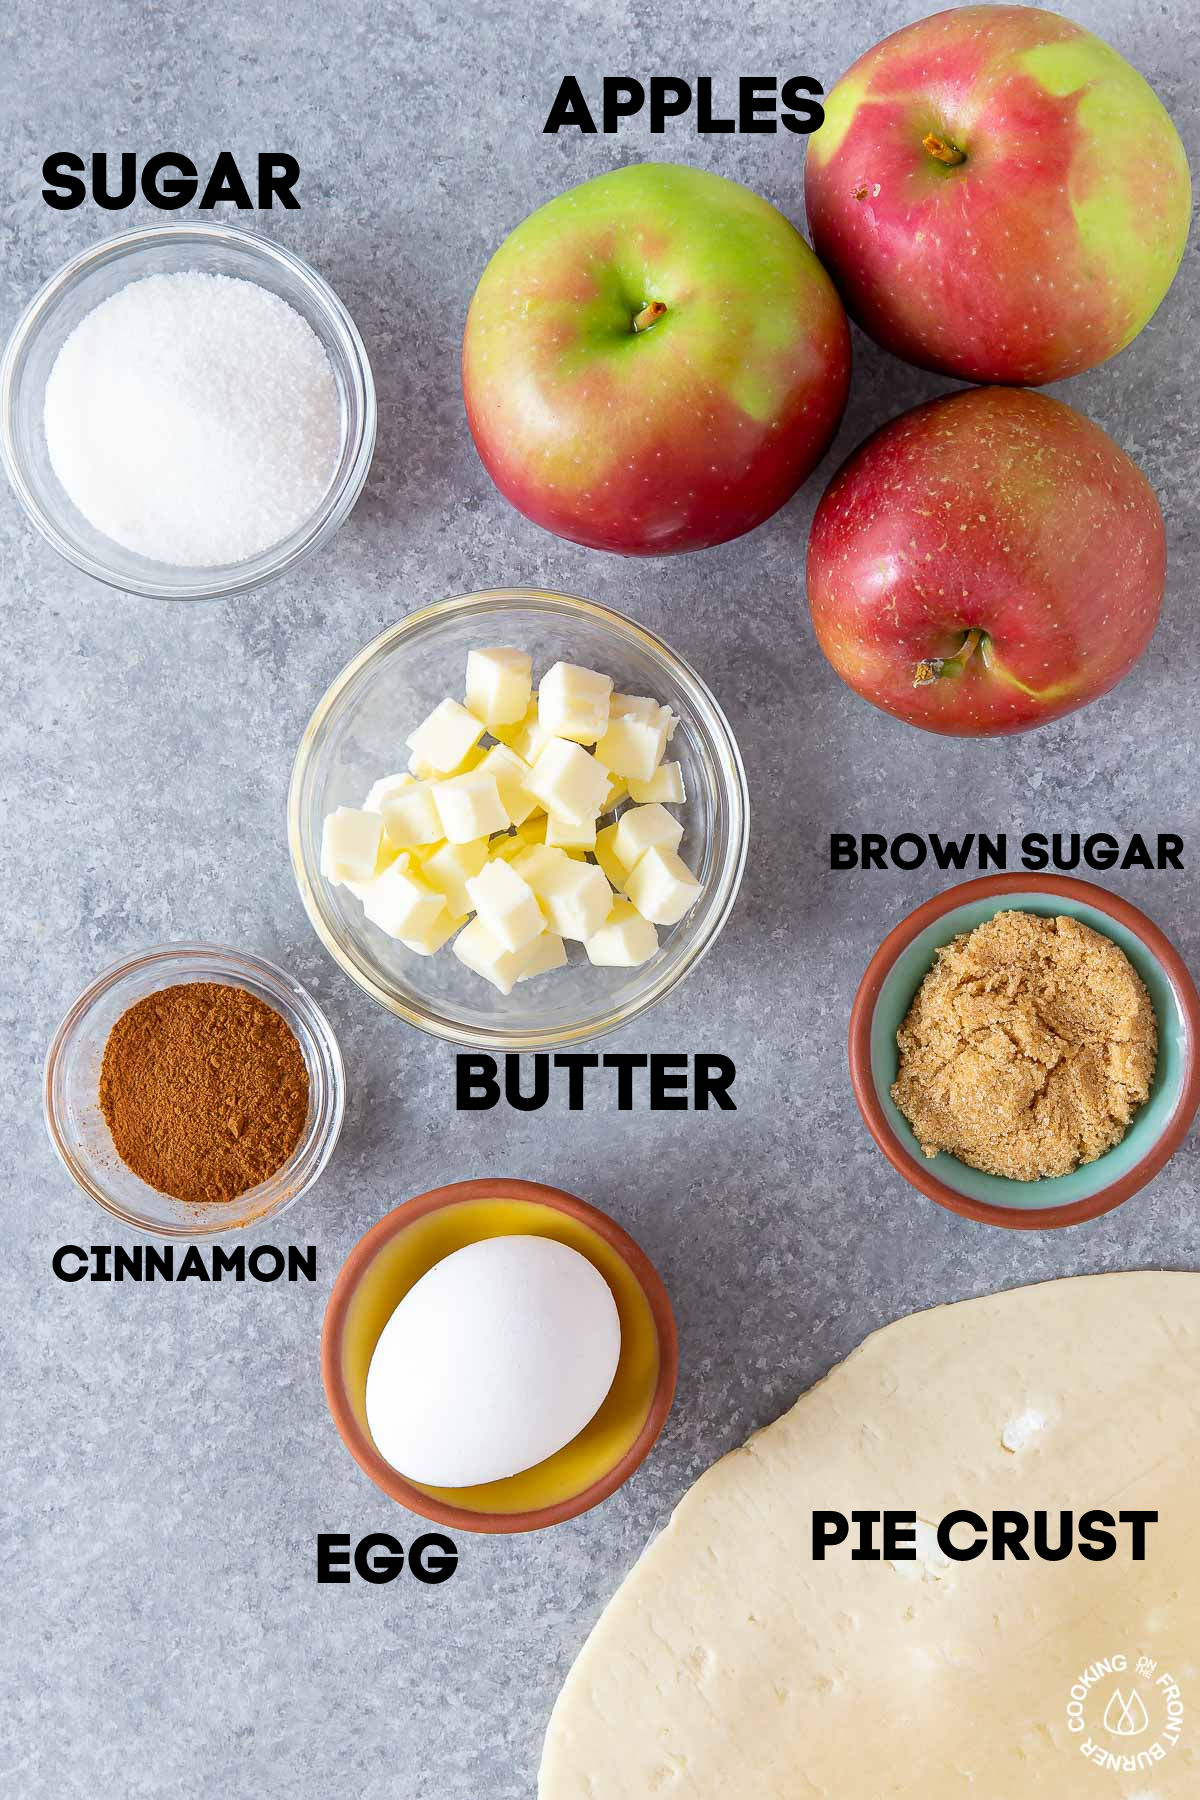 sugar, brown sugar, apples, butter, cinnamon, egg and pie crust on a board